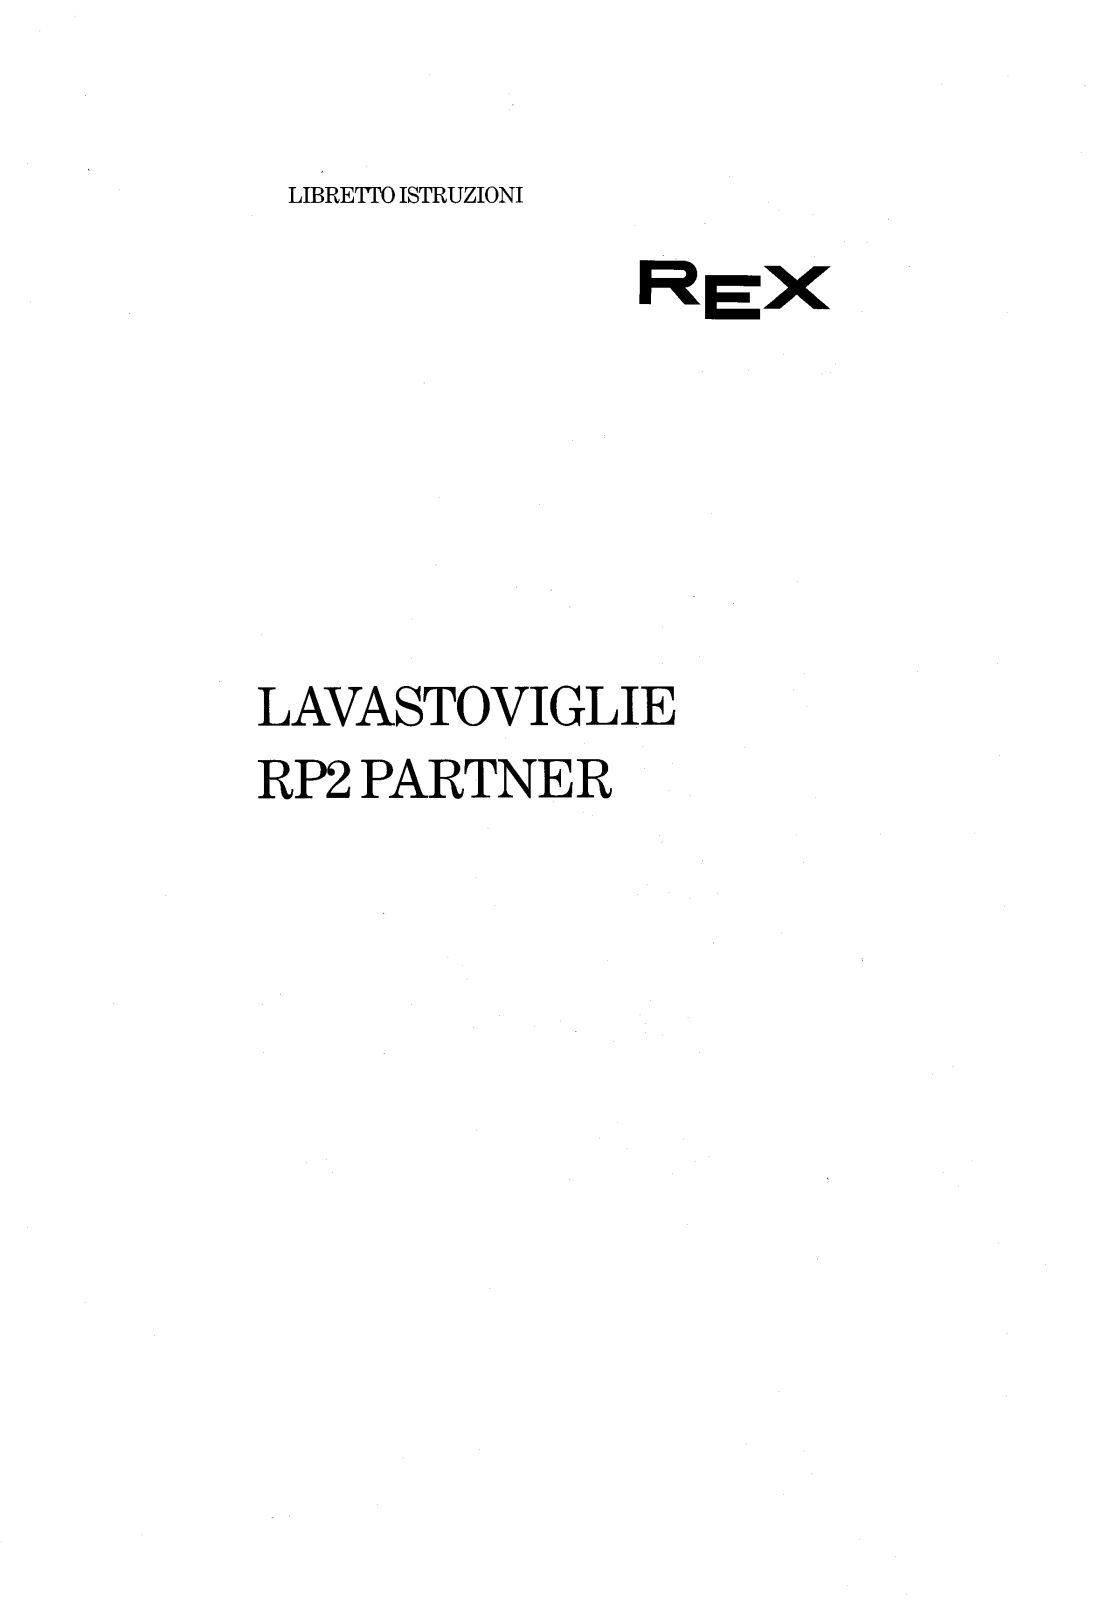 Rex RP2N User Manual